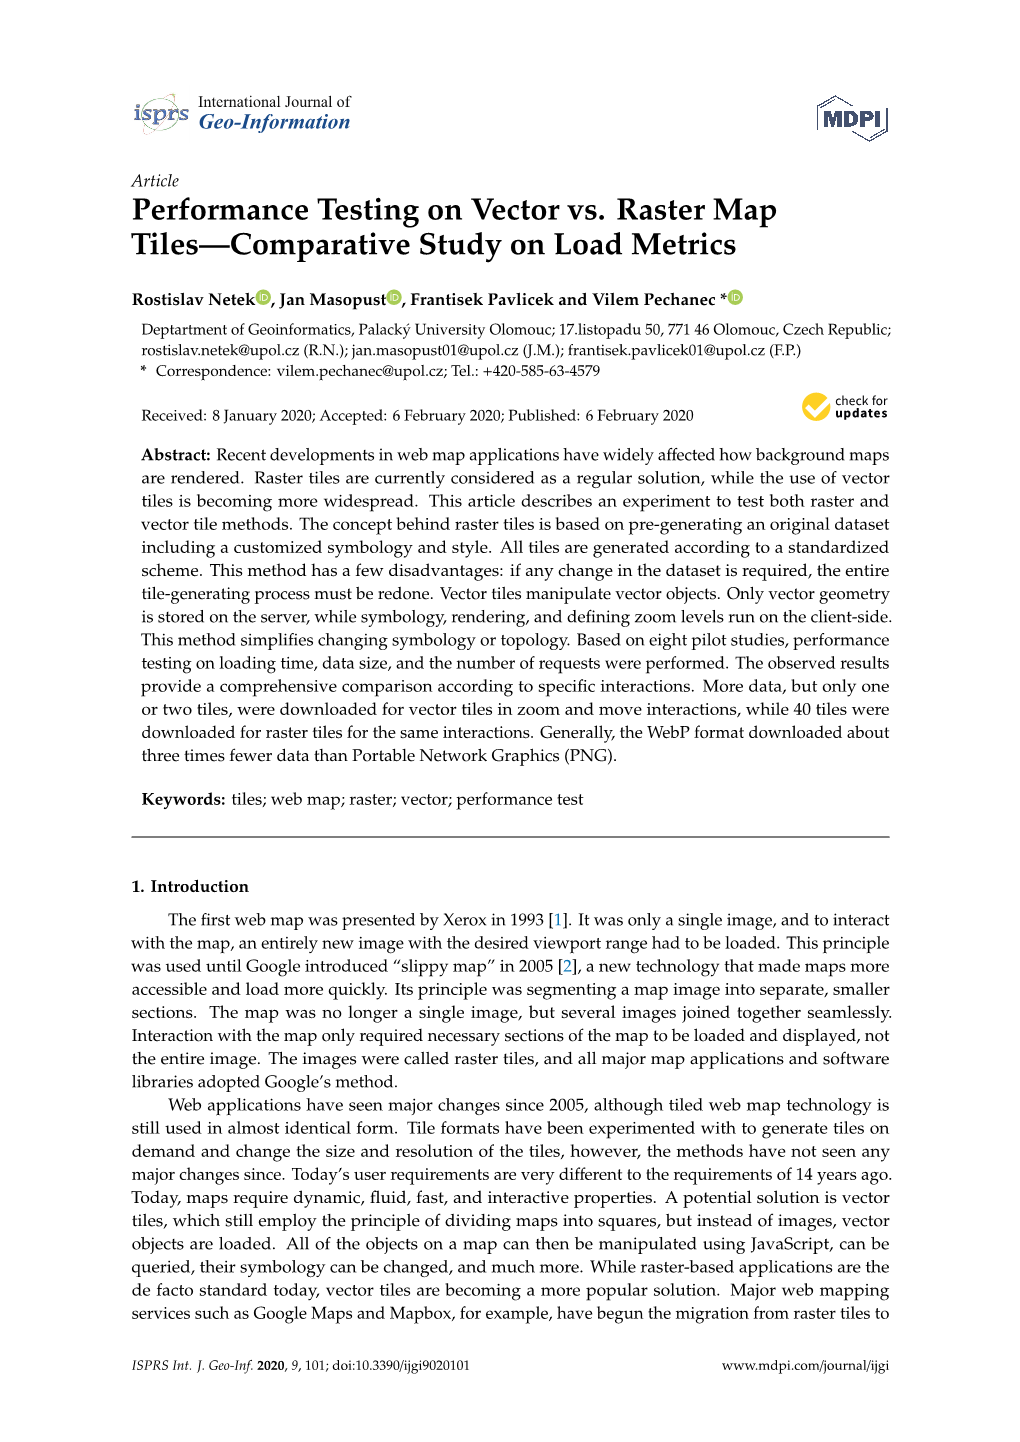 Performance Testing on Vector Vs. Raster Map Tiles—Comparative Study on Load Metrics